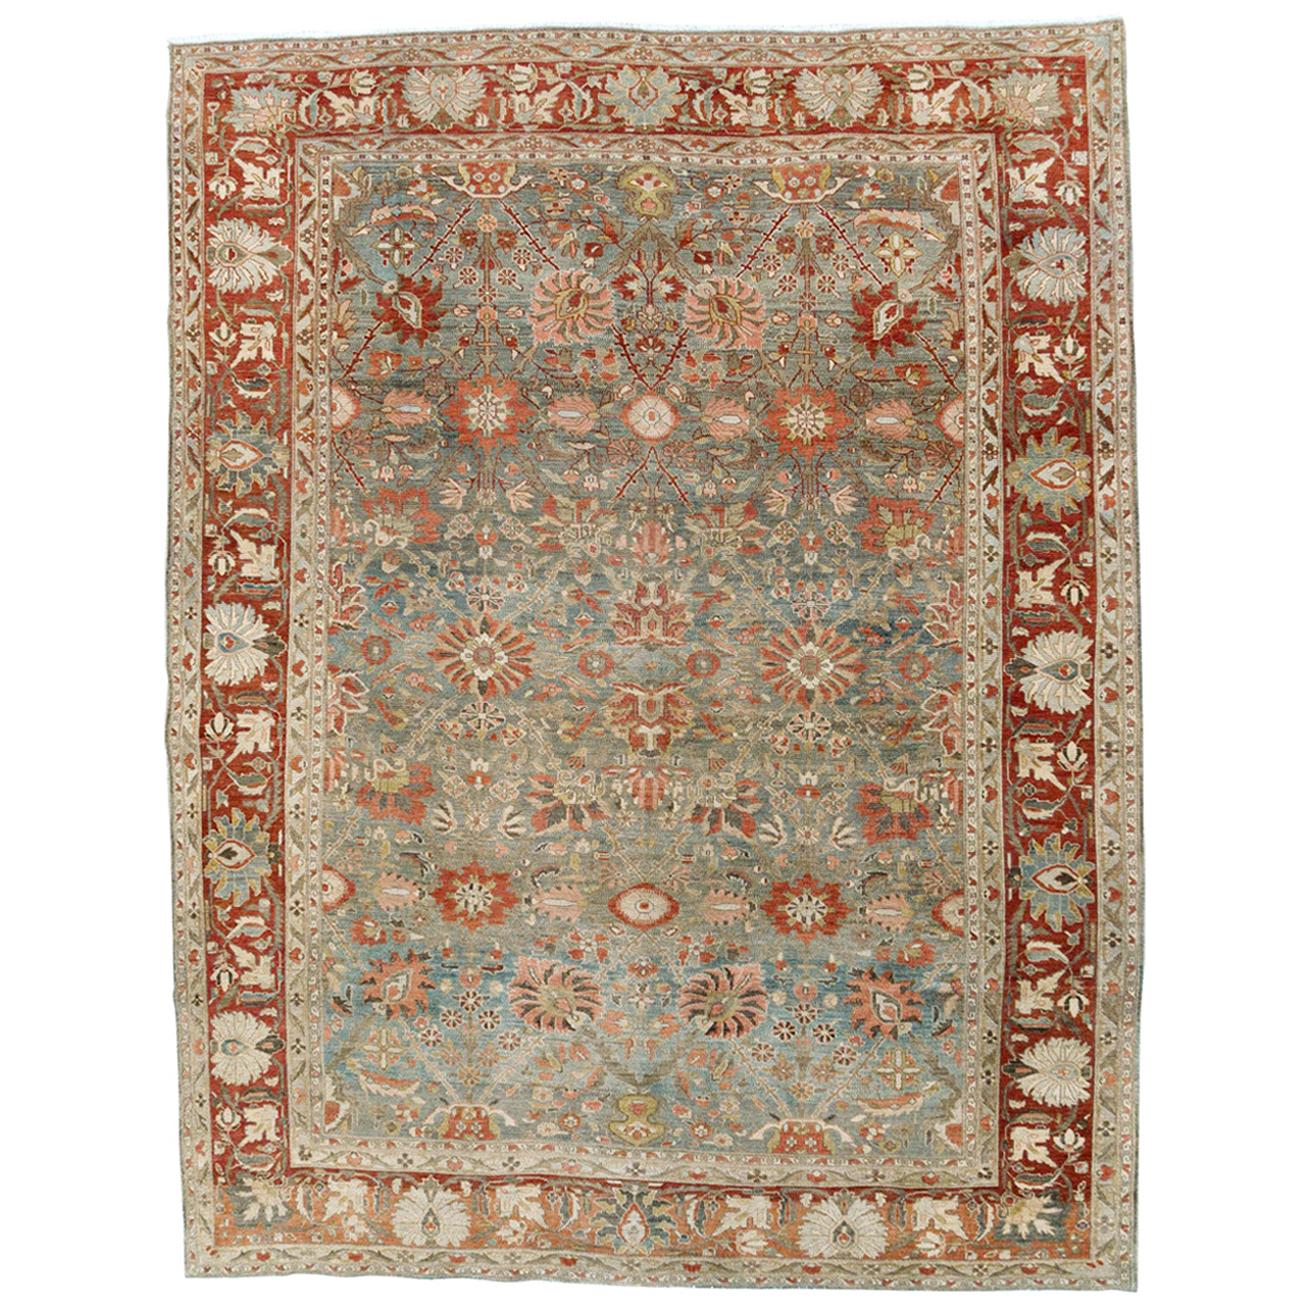 Early 20th Century Handmade Persian Sarouk Room Size Carpet